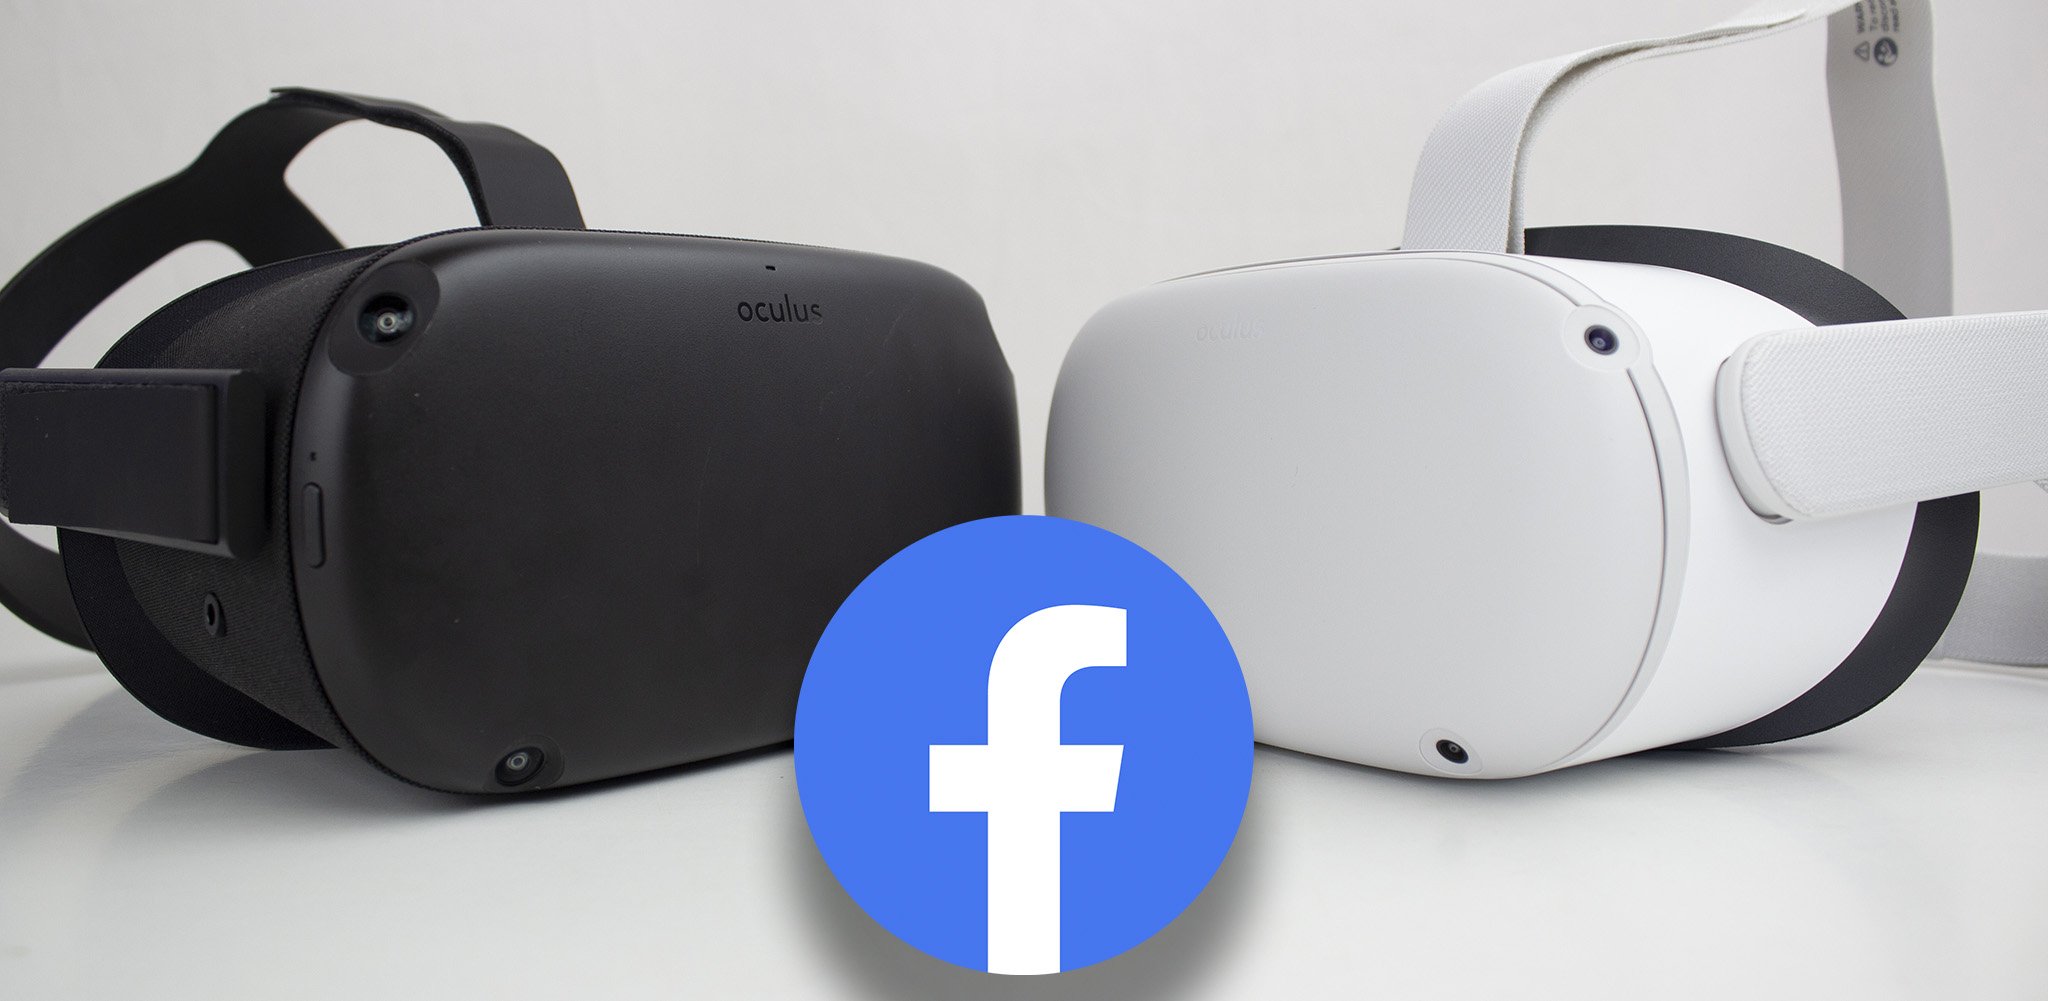 oculus vr facebook